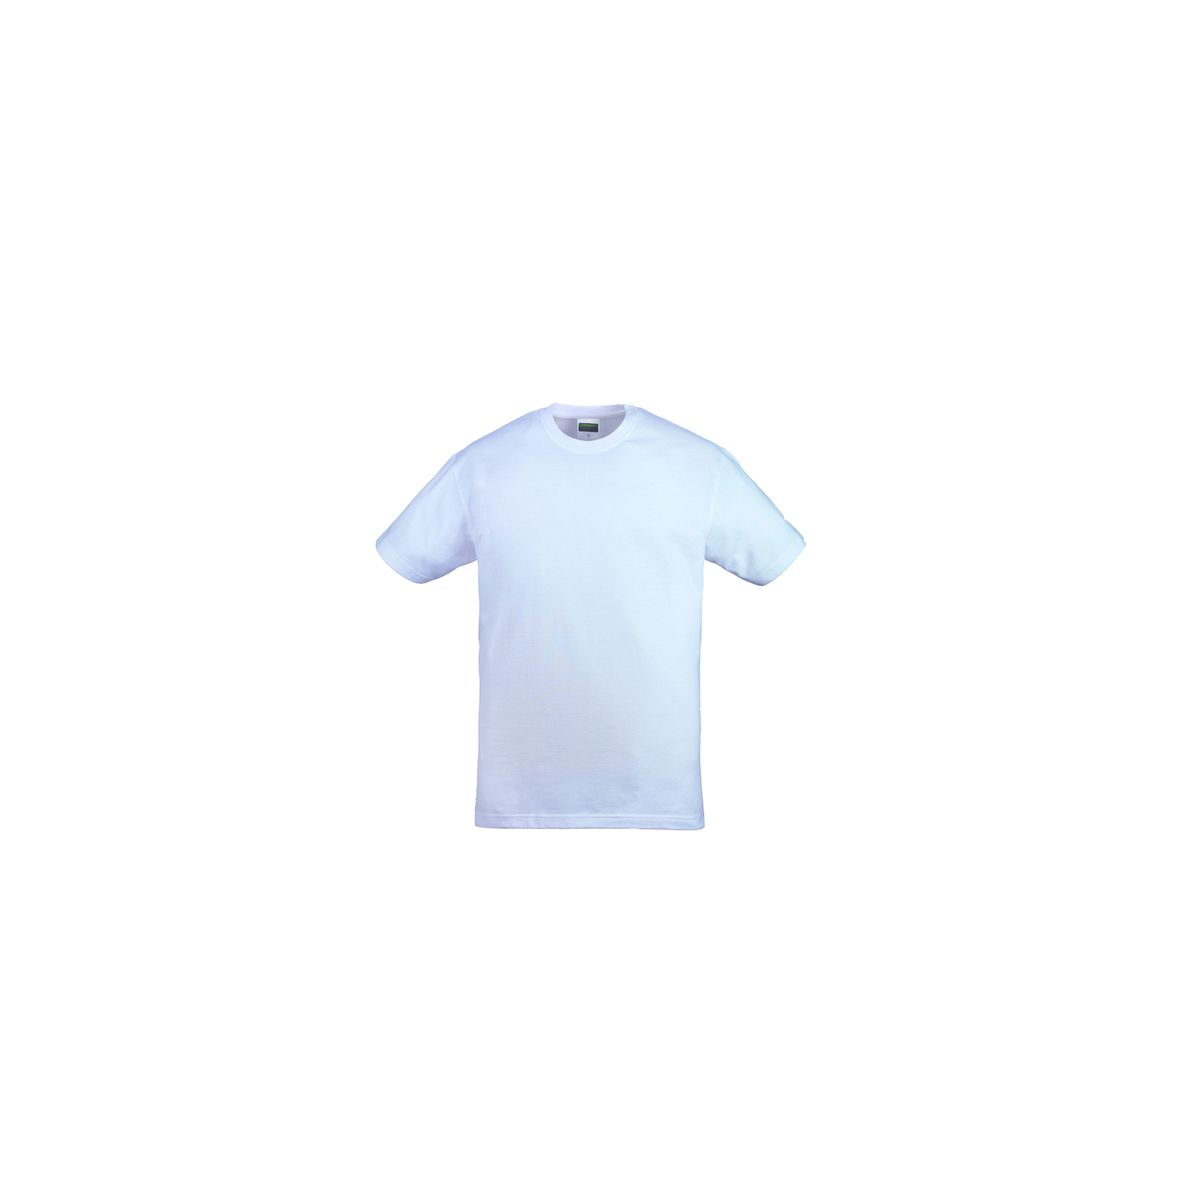 T-shirt TRIP MC blanc - COVERGUARD - Taille XL 0